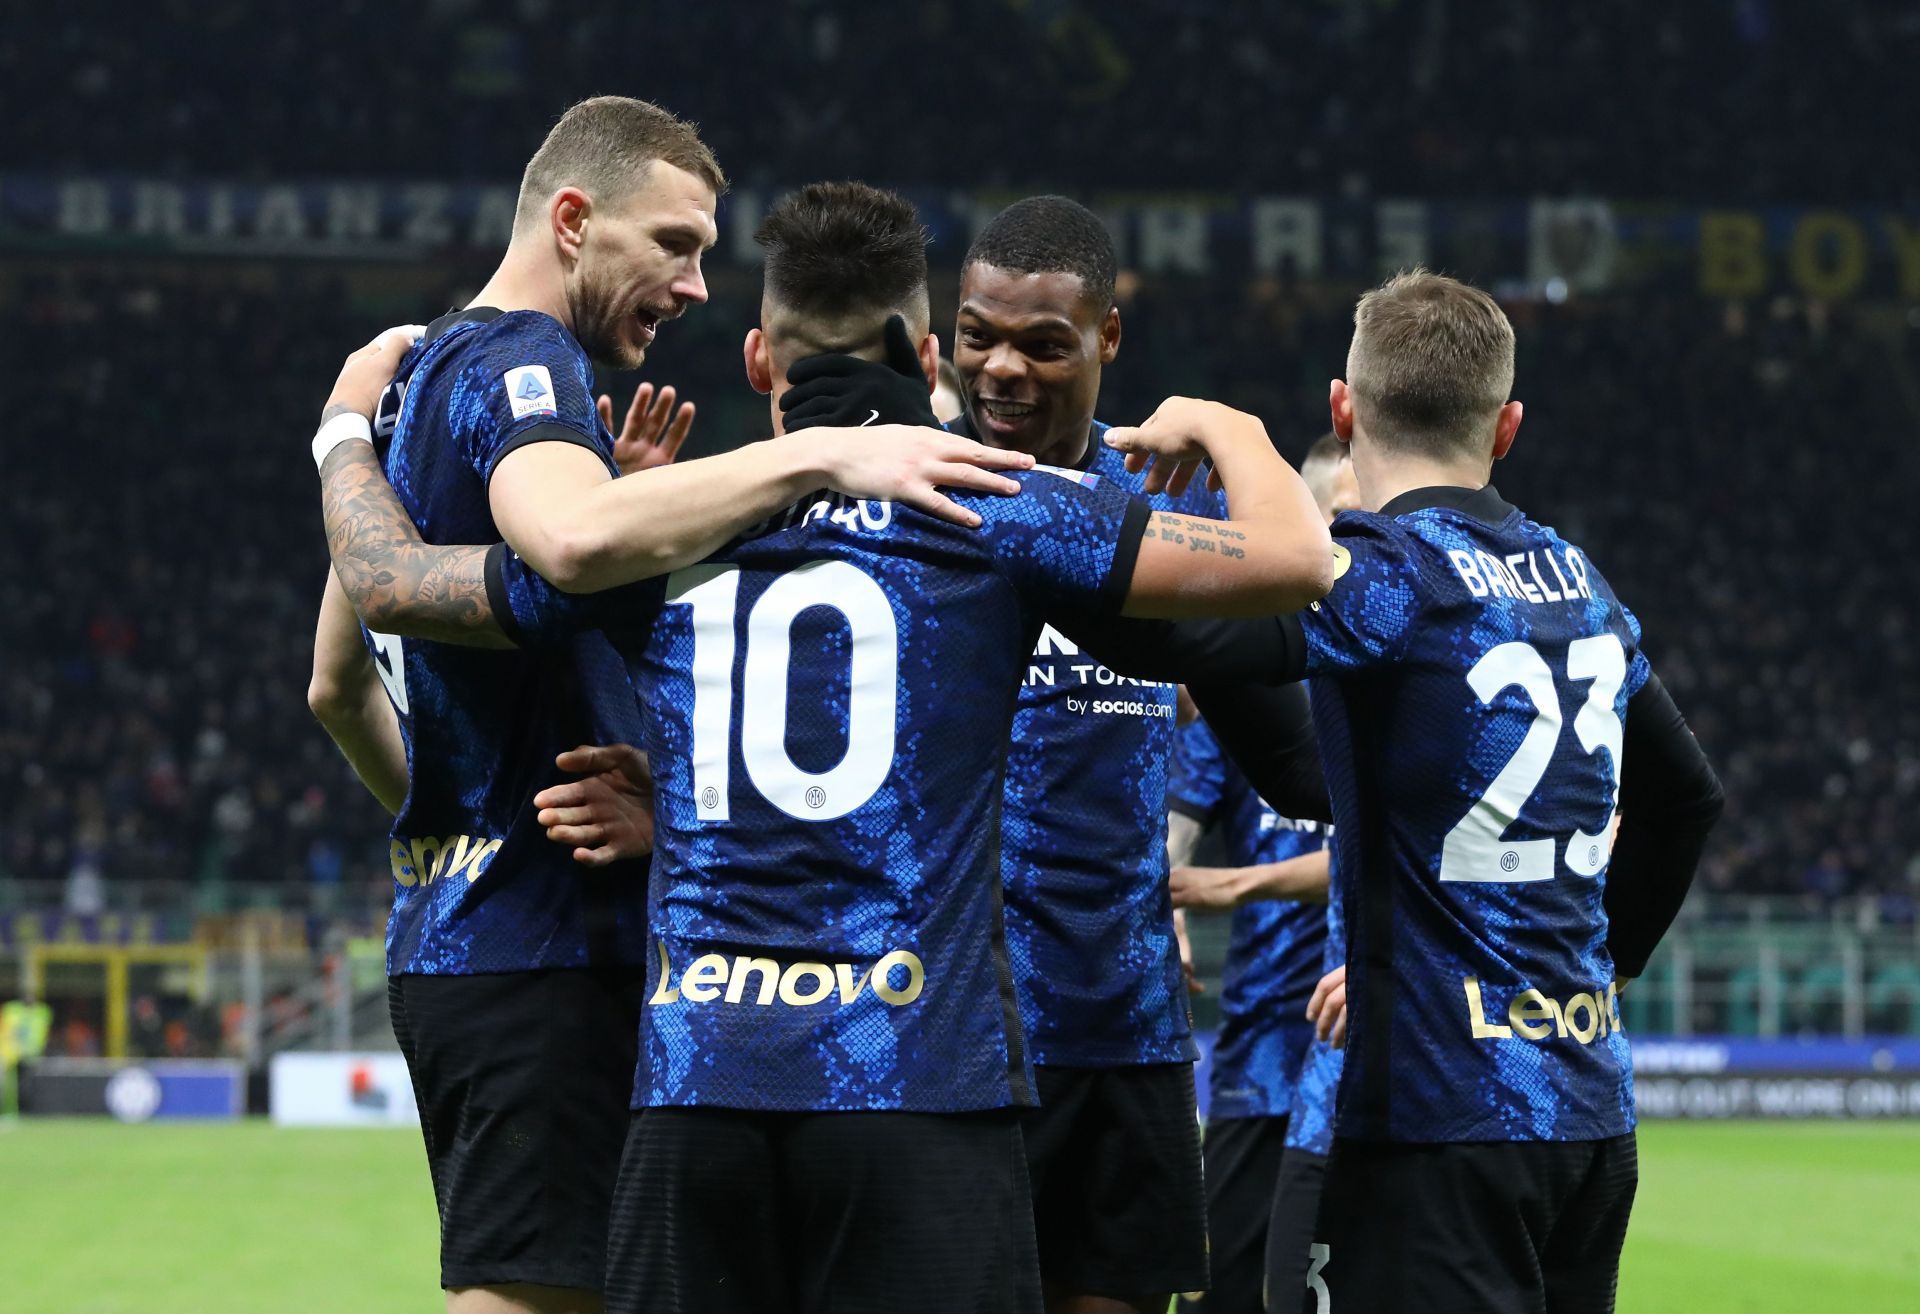 Inter Milan are defending Italian champions